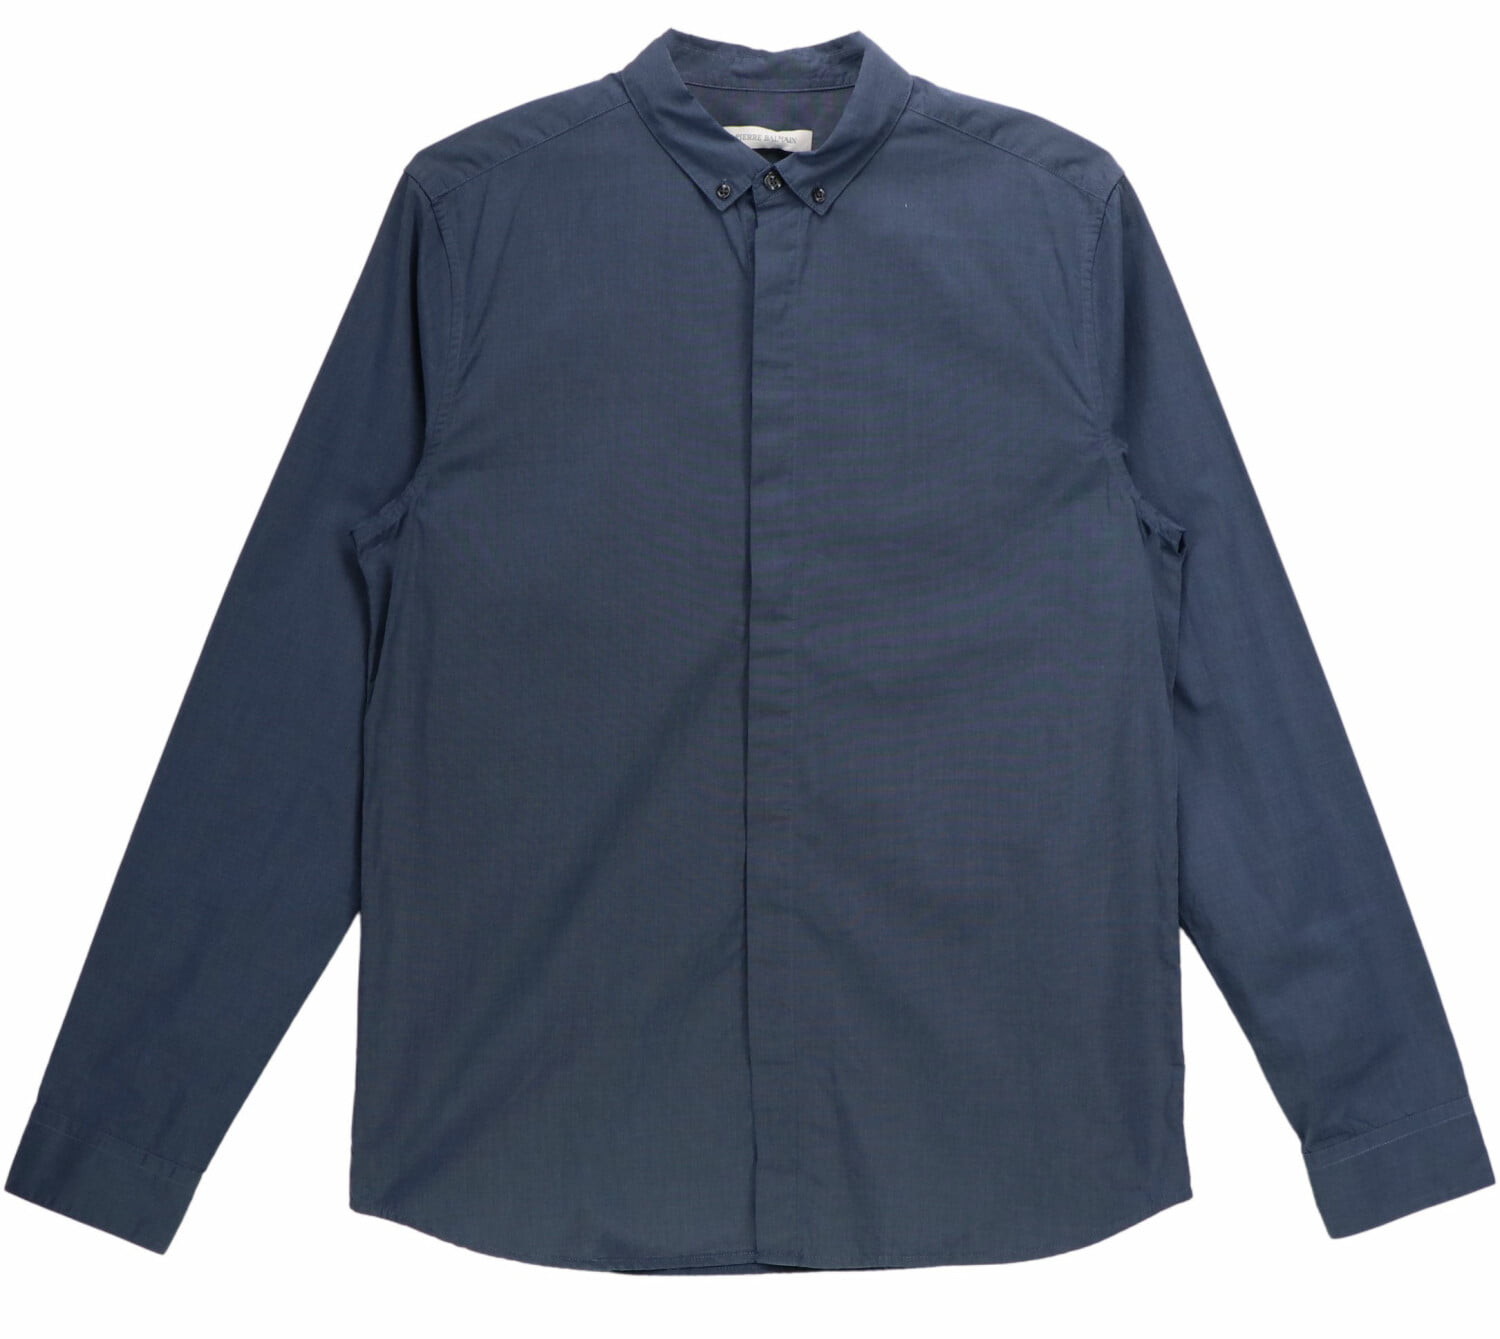 Details about   NWT Pierre balmain casual dress Shirt spread collar sz 15/38 